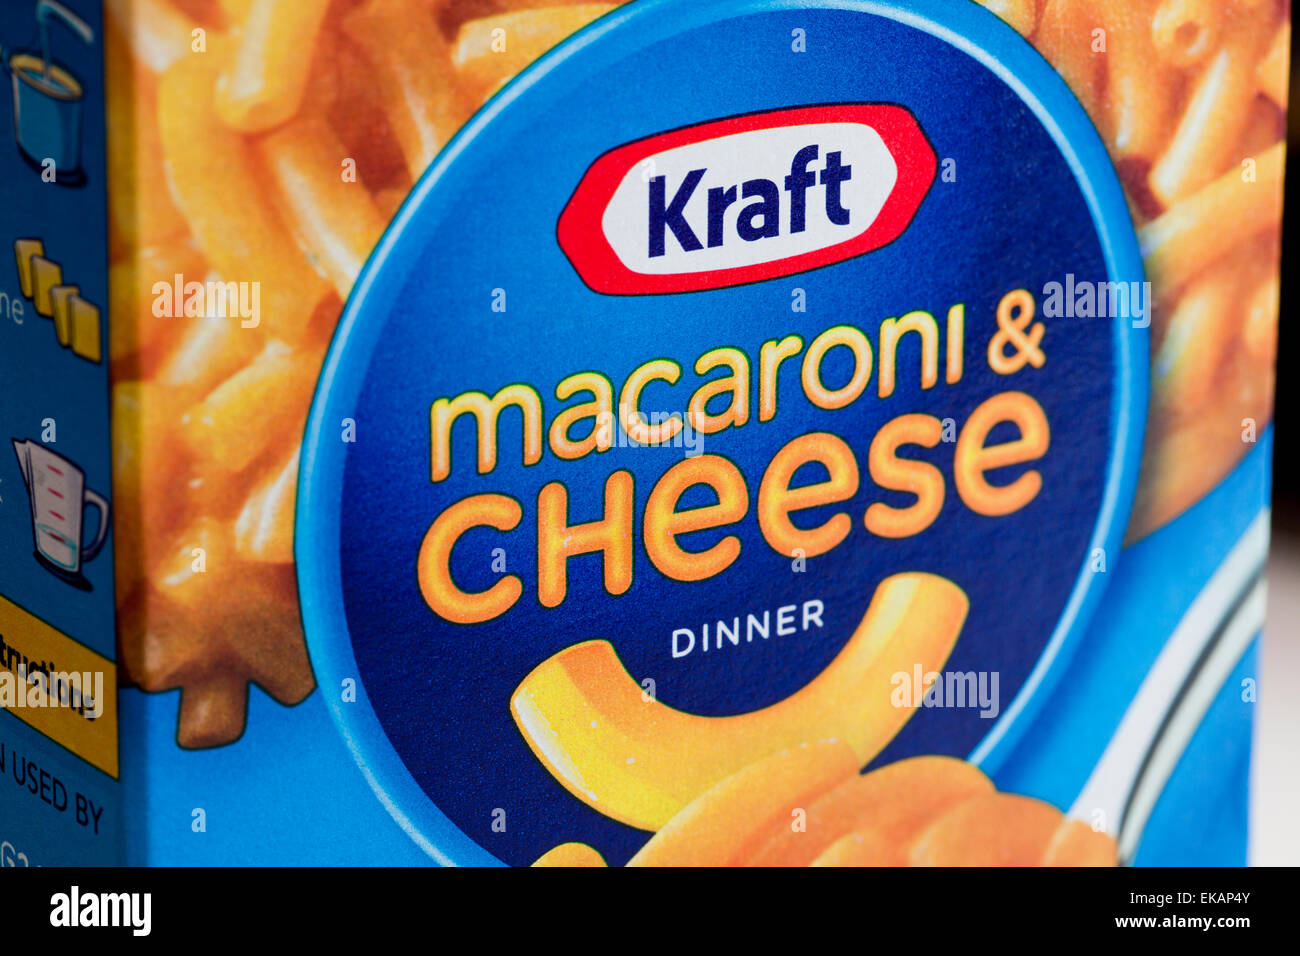 Kraft Macaroni & Cheese package - USA Stock Photo